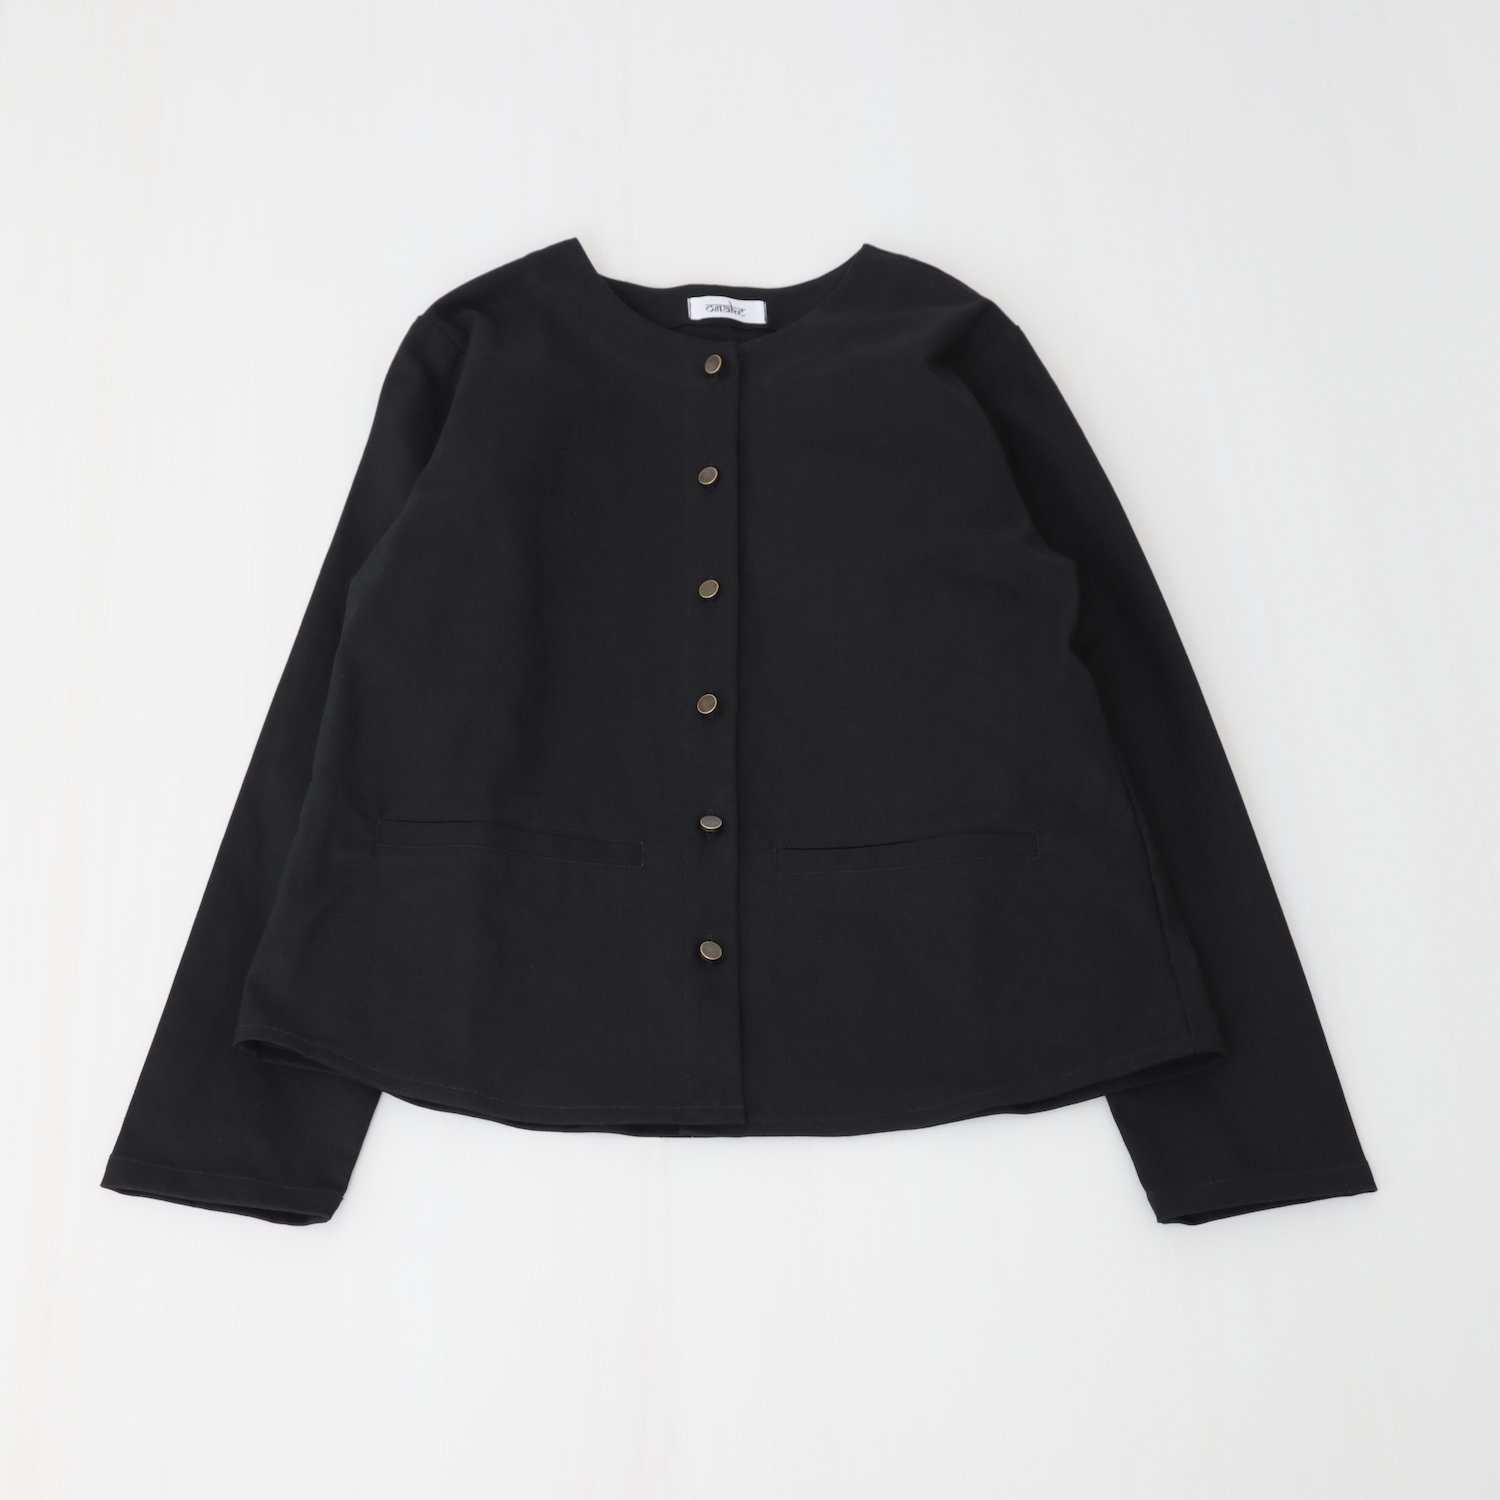 Paris jacket / black